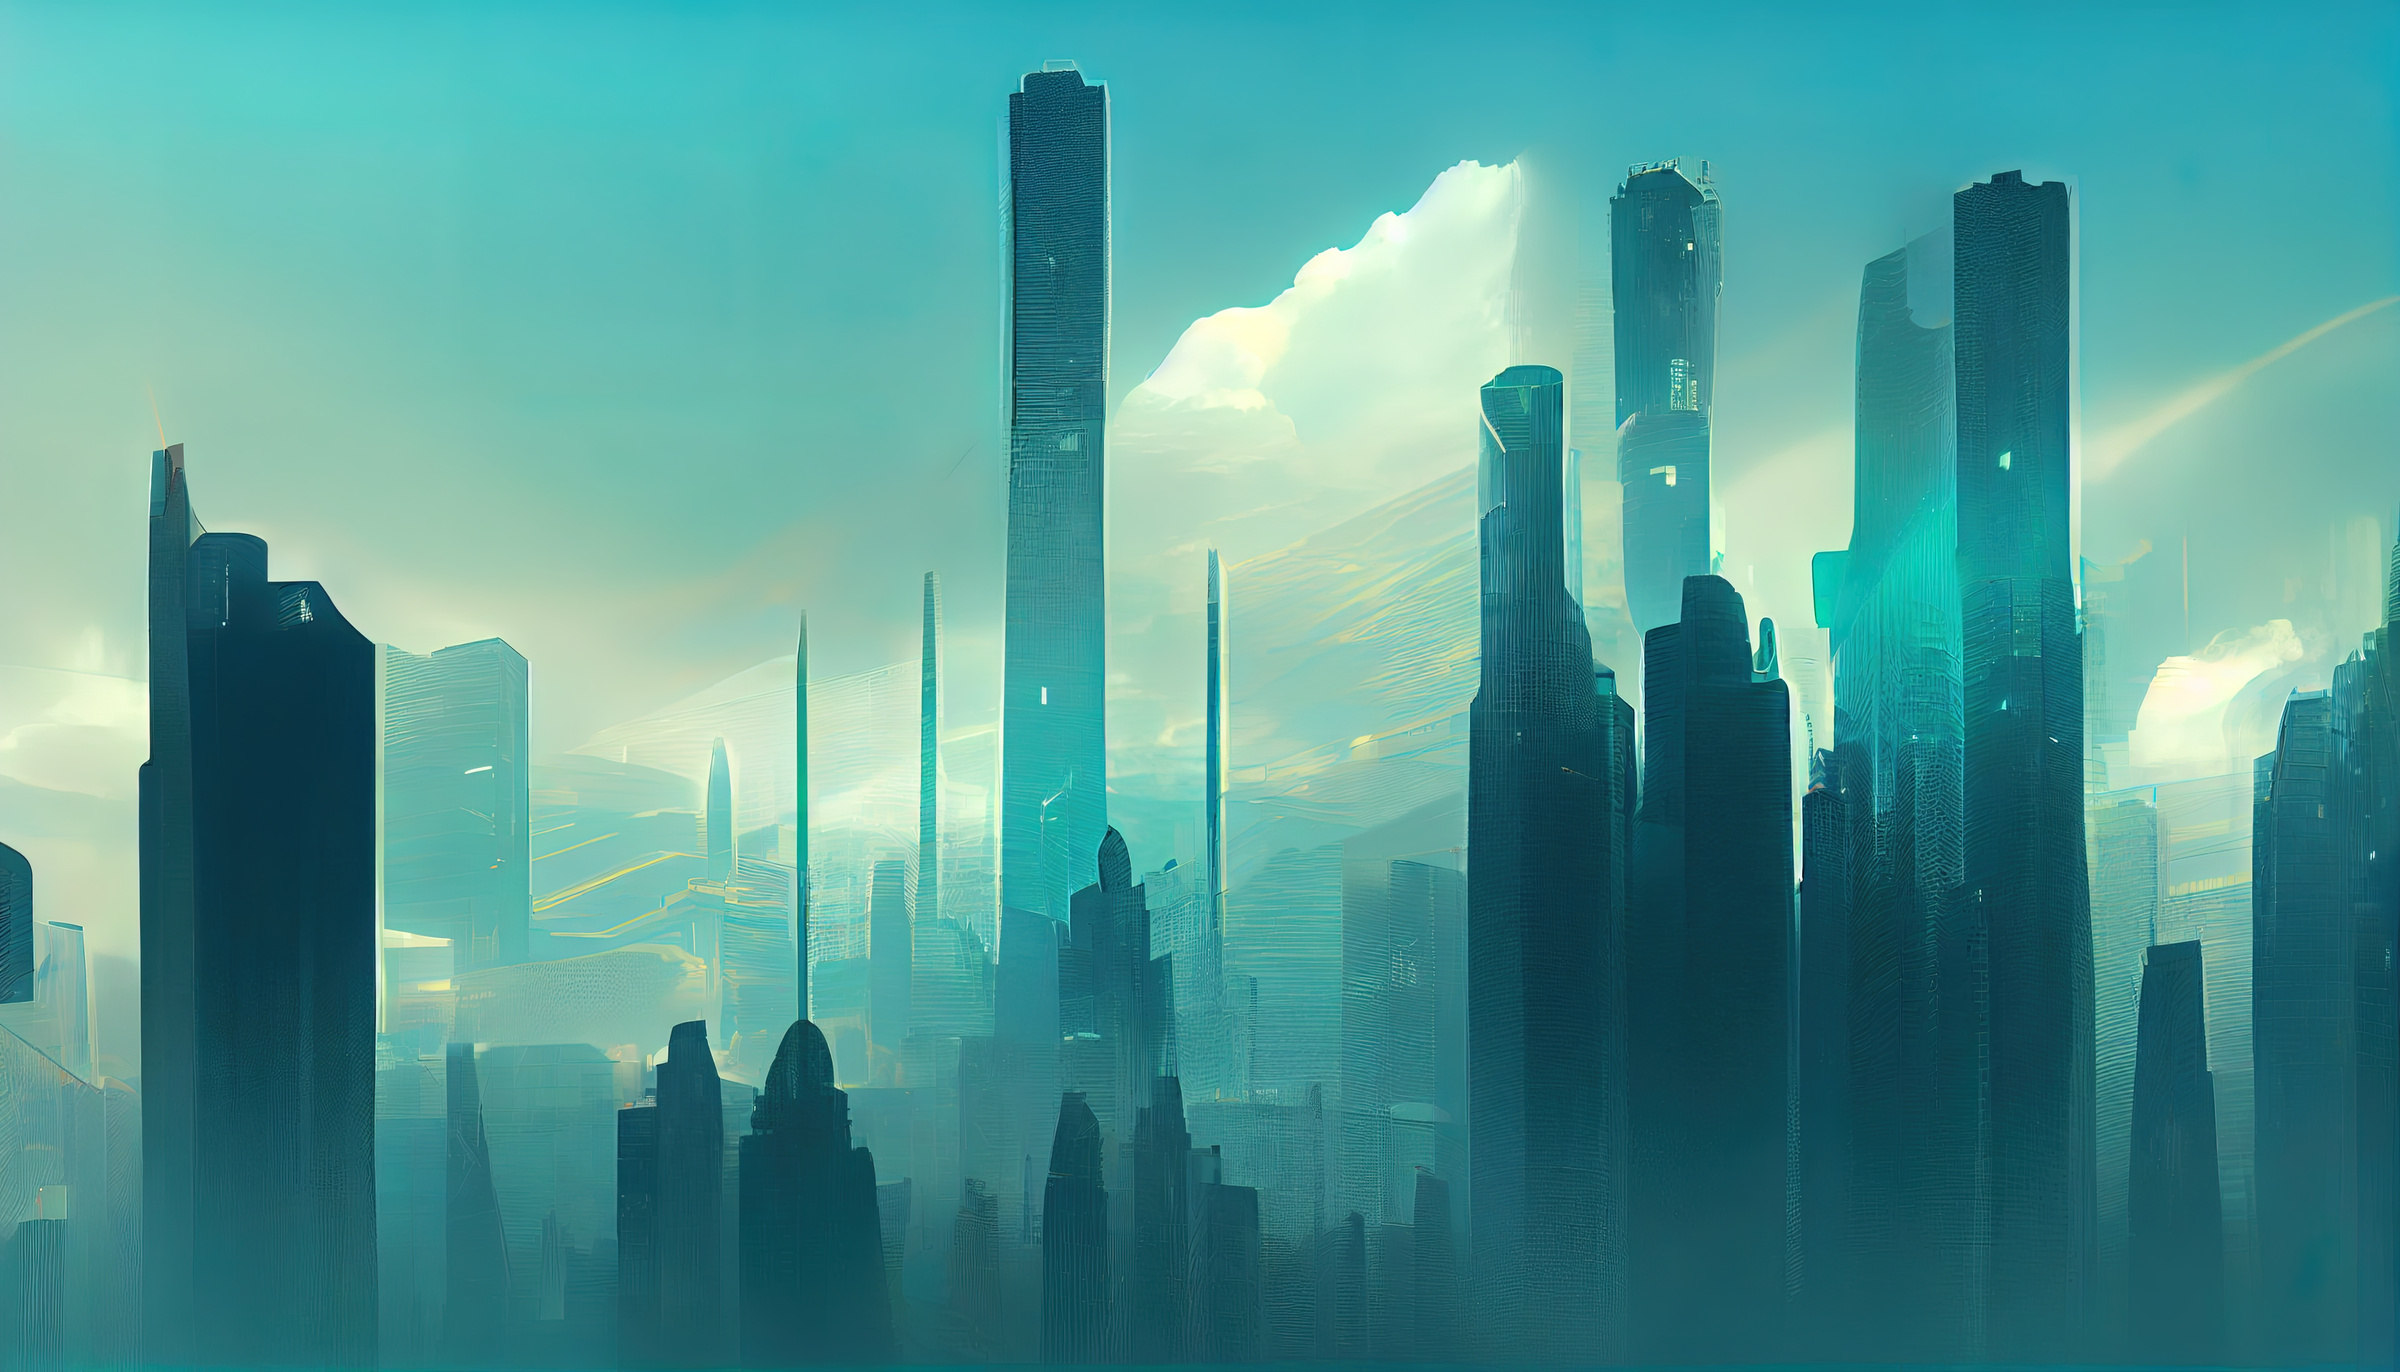 Cyberpunk futuristic city - digital illustration.